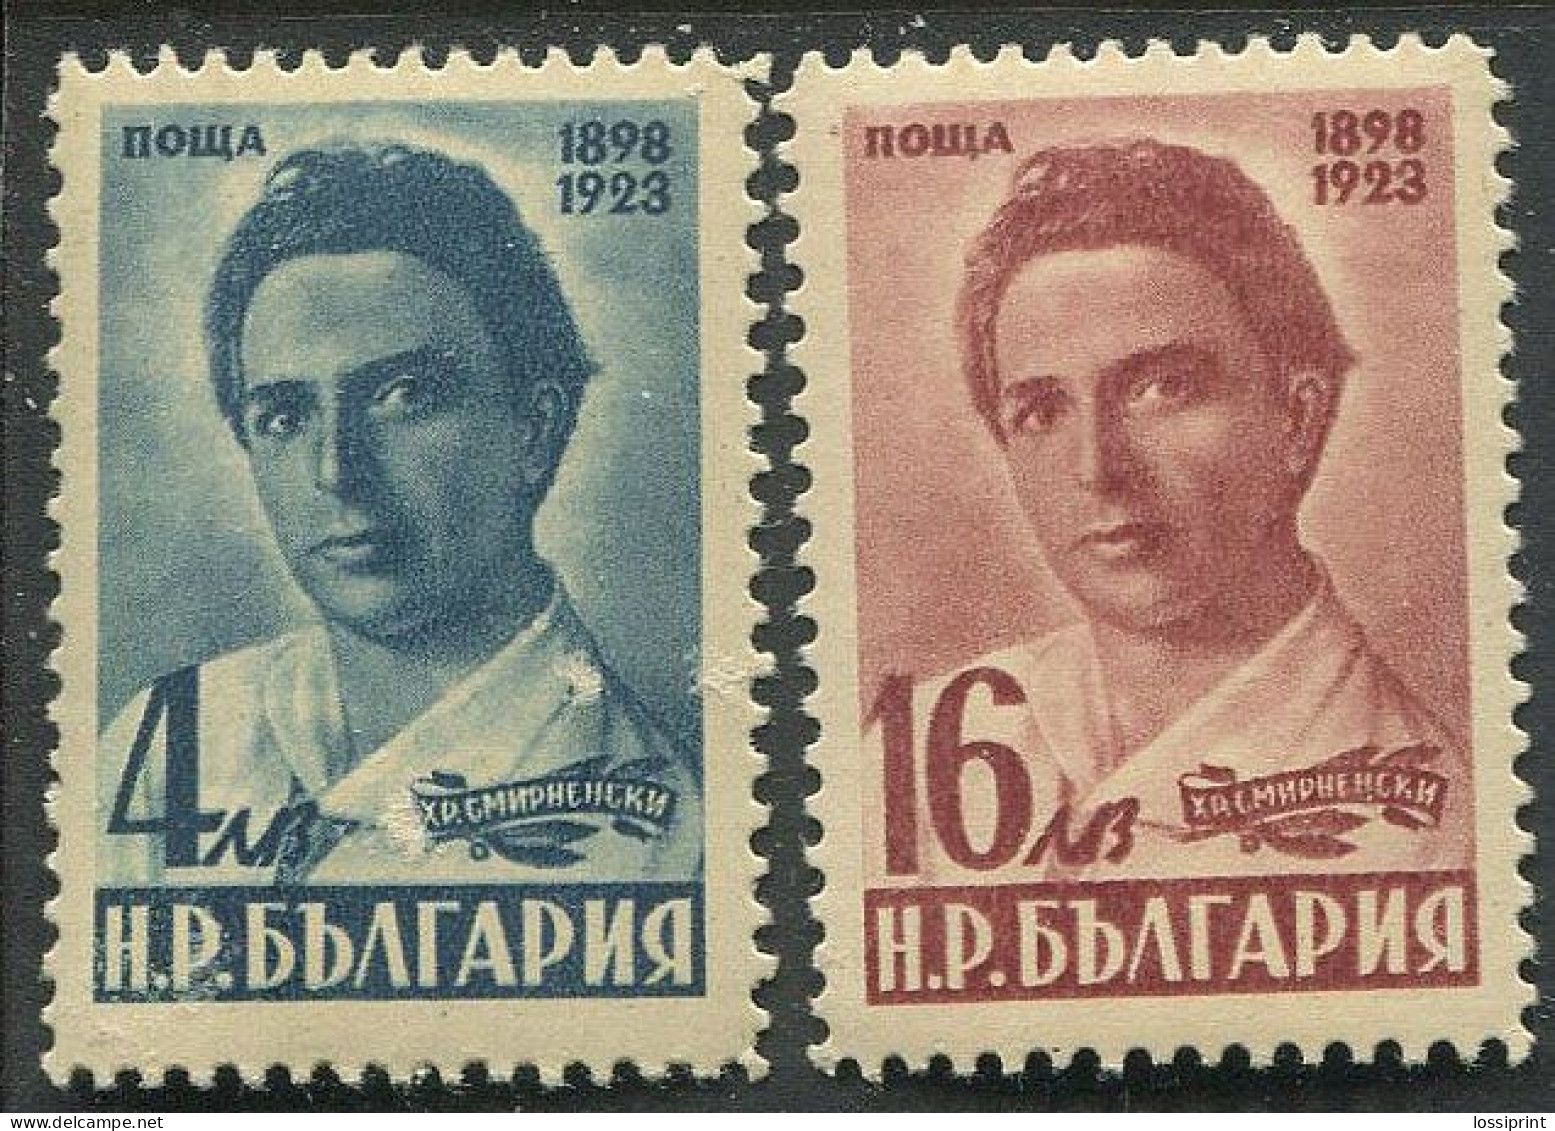 Bulgaria:Unused Stamps Serie H.R.Smirnenski, 1948, MNH - Neufs